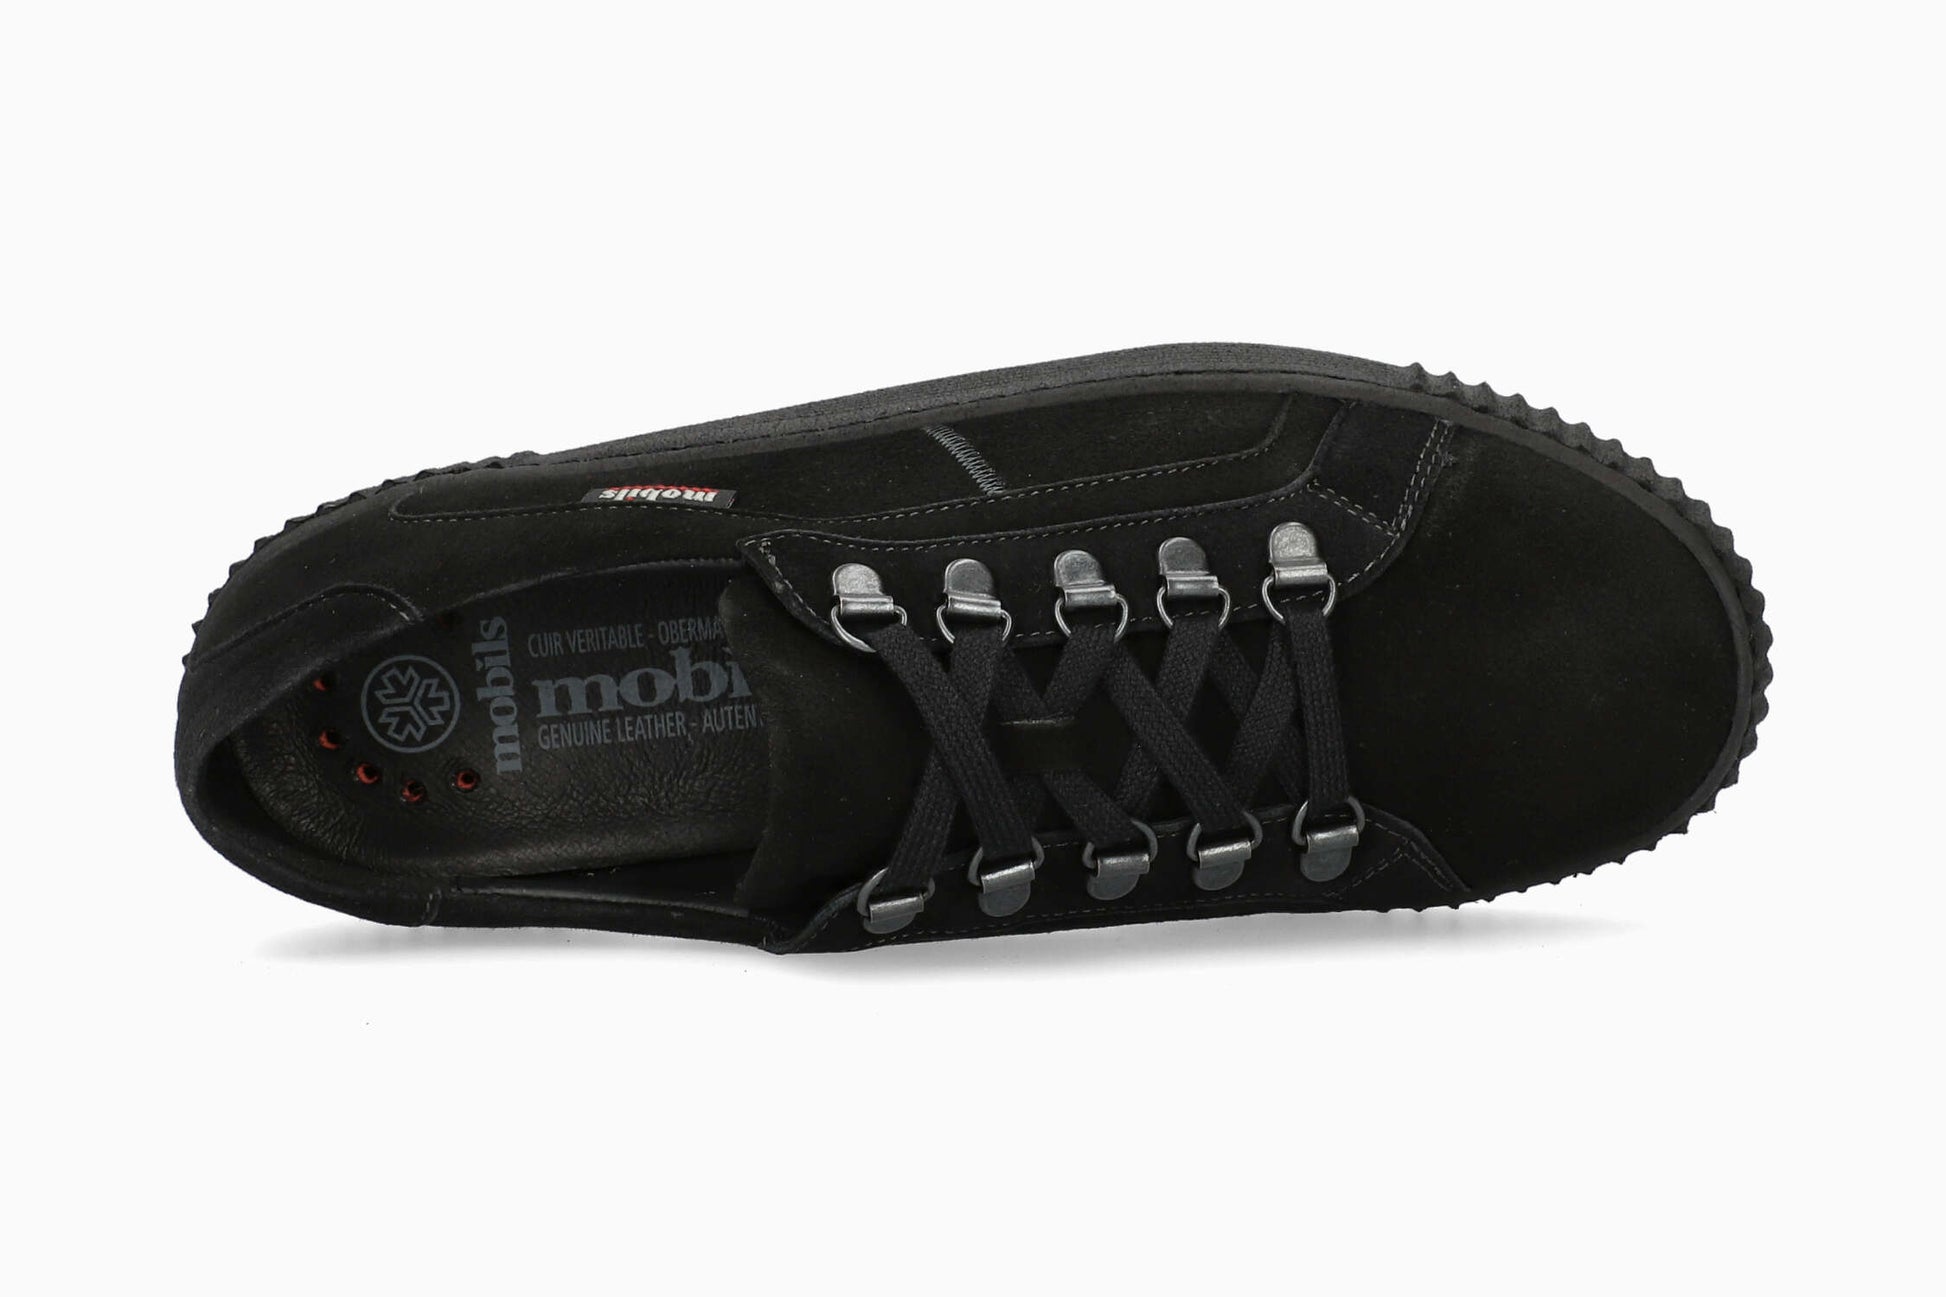 Mobils Edena Black Women's Sneaker Top